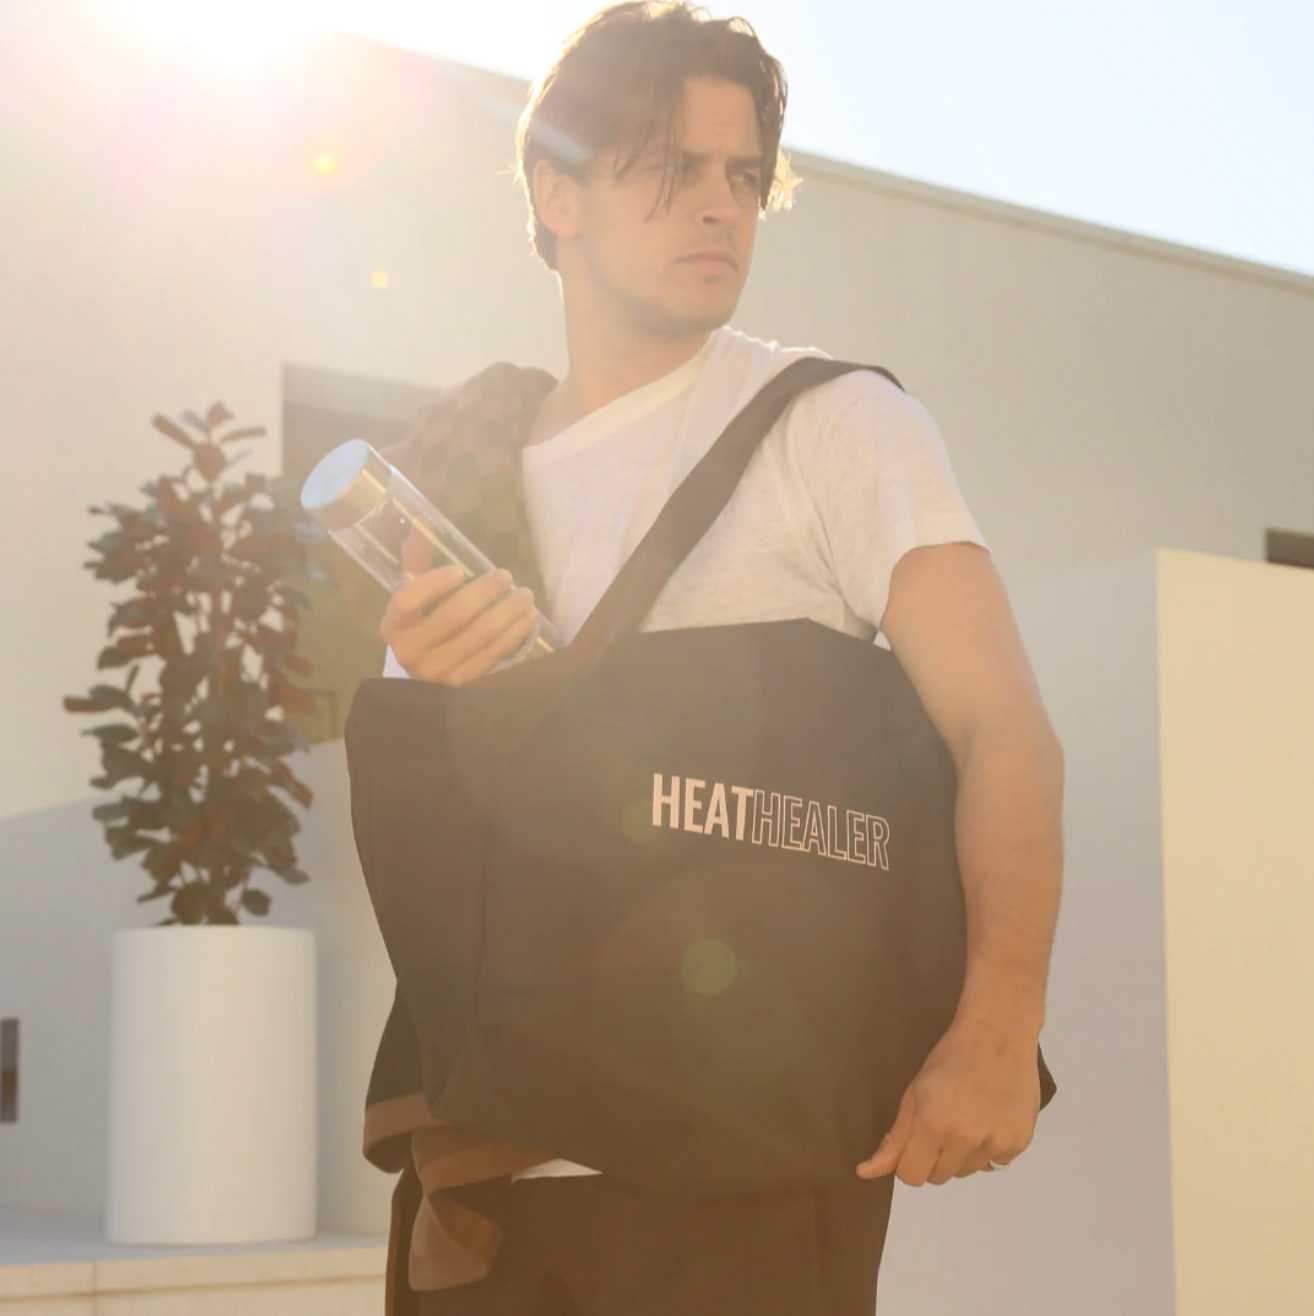 man carrying the heat healer sauna blanket in a bag over his shoulder